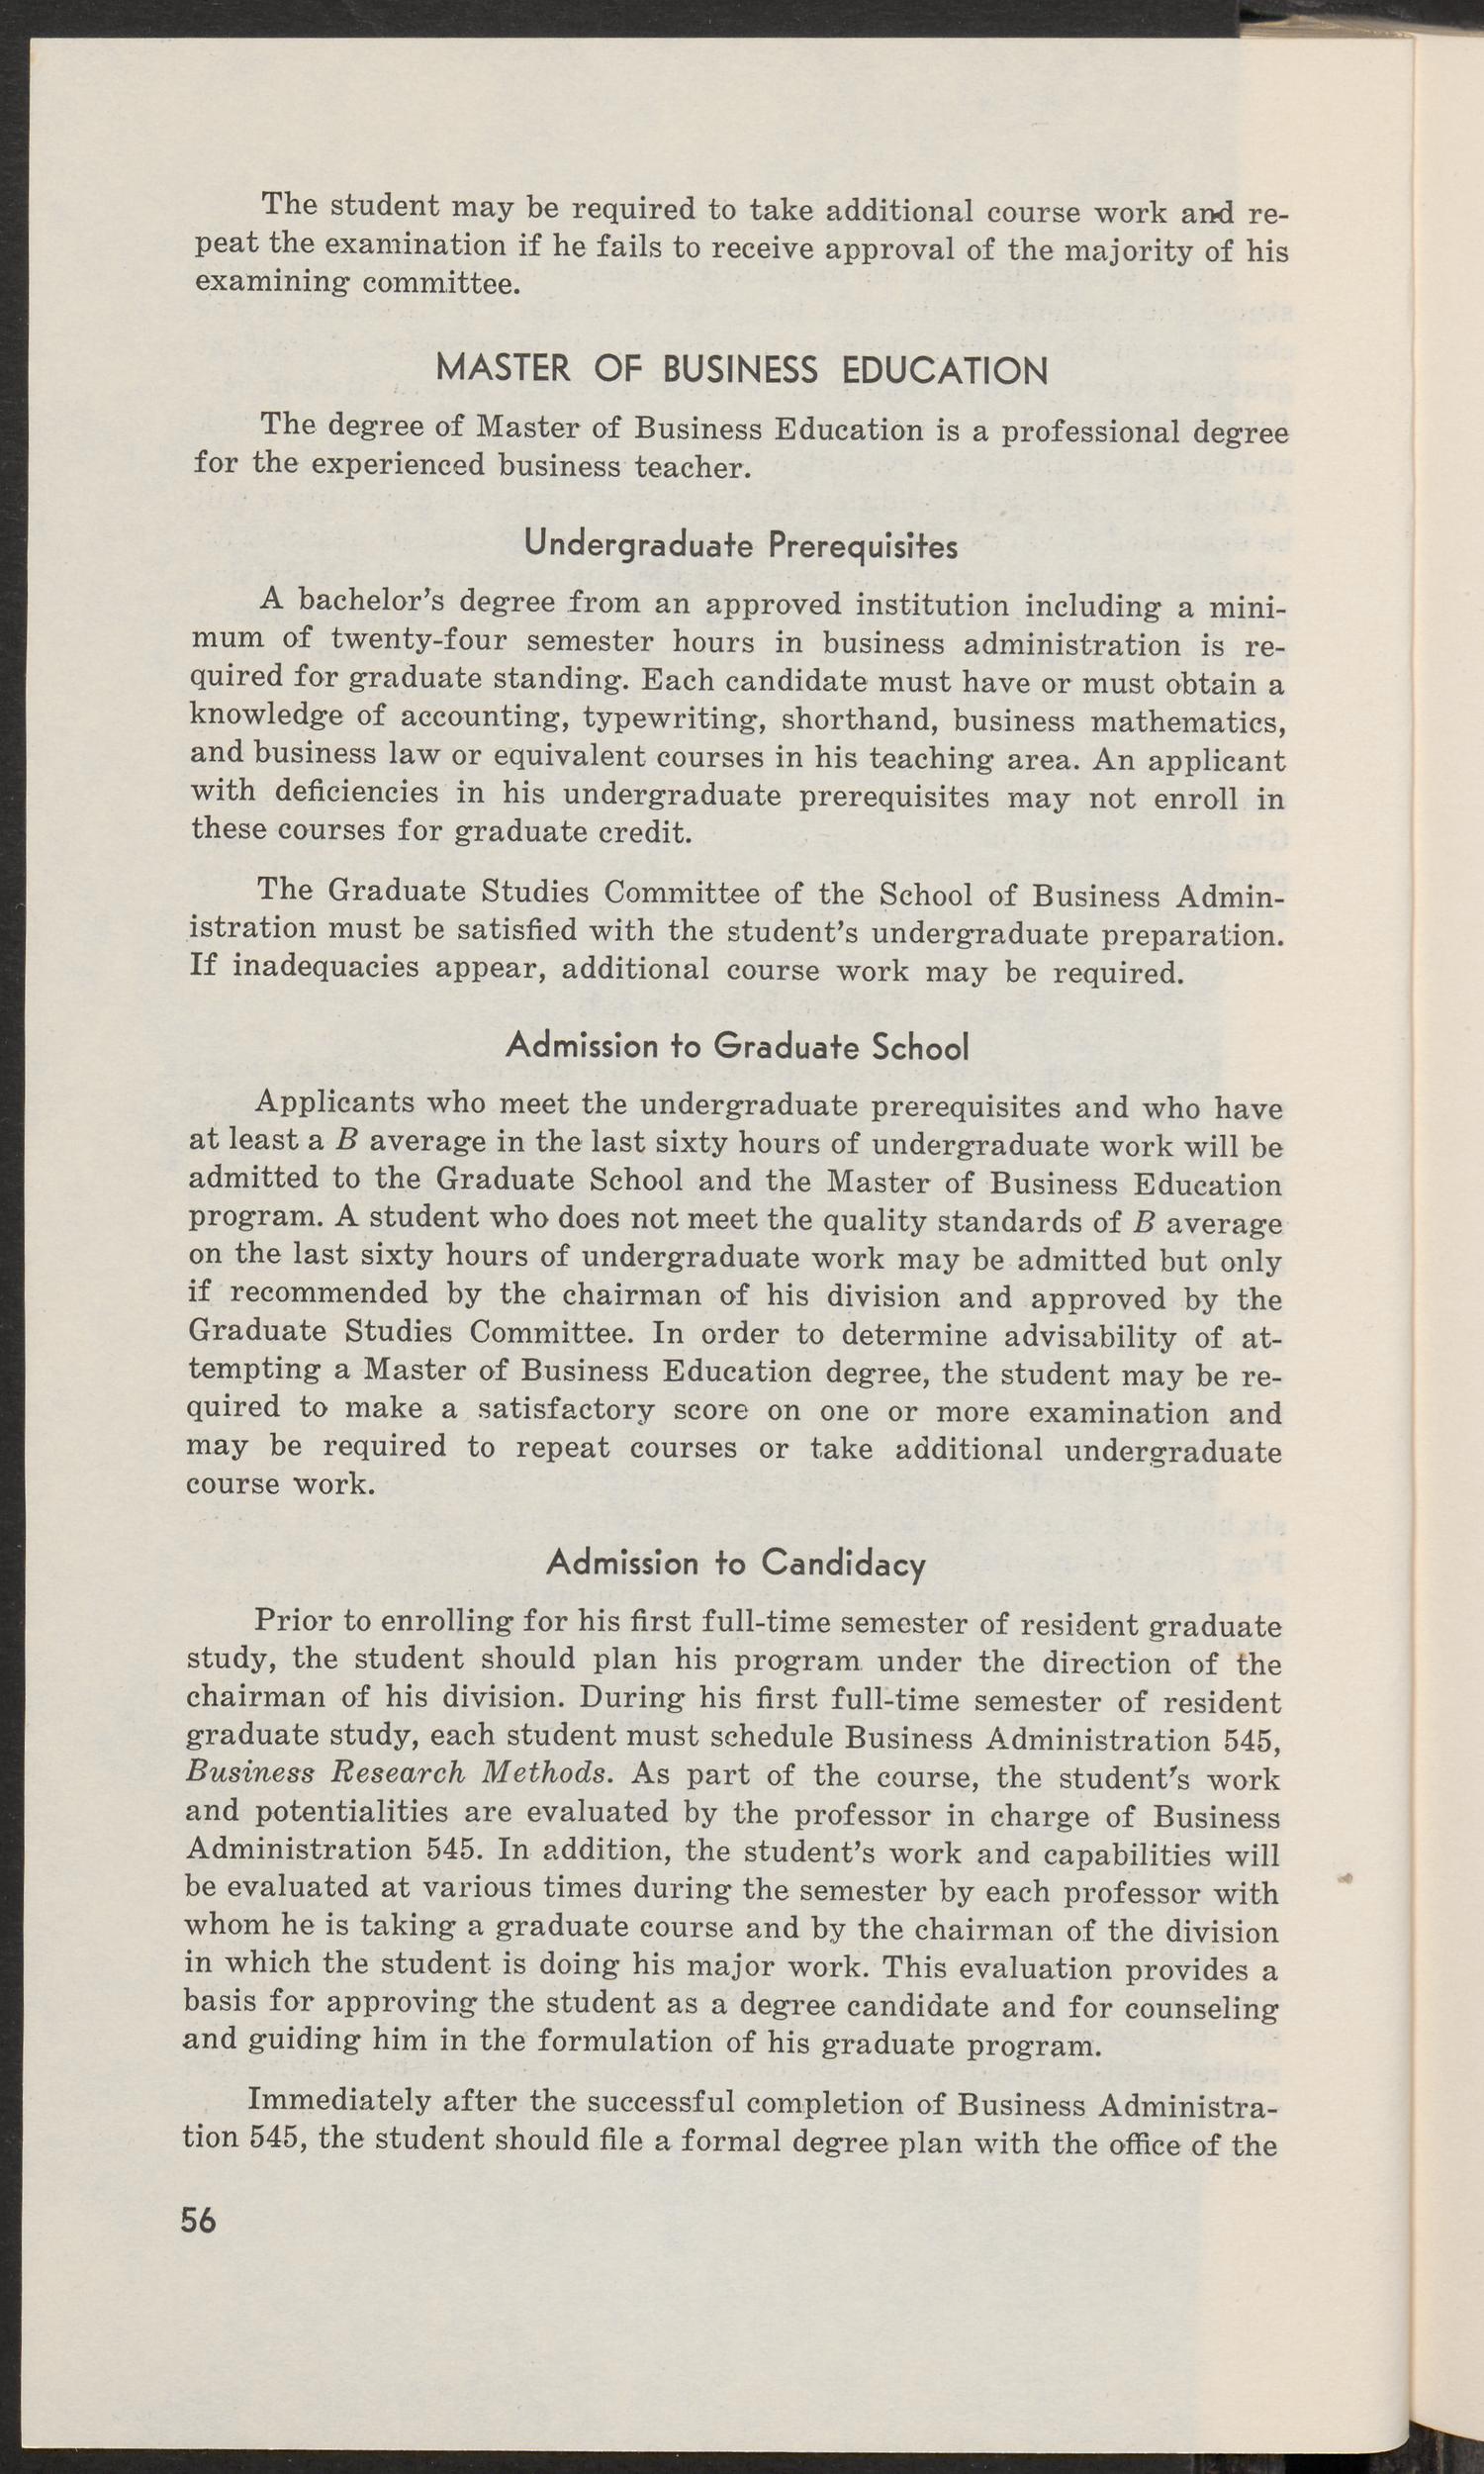 Catalog of North Texas State College: 1961-1962, Graduate
                                                
                                                    56
                                                